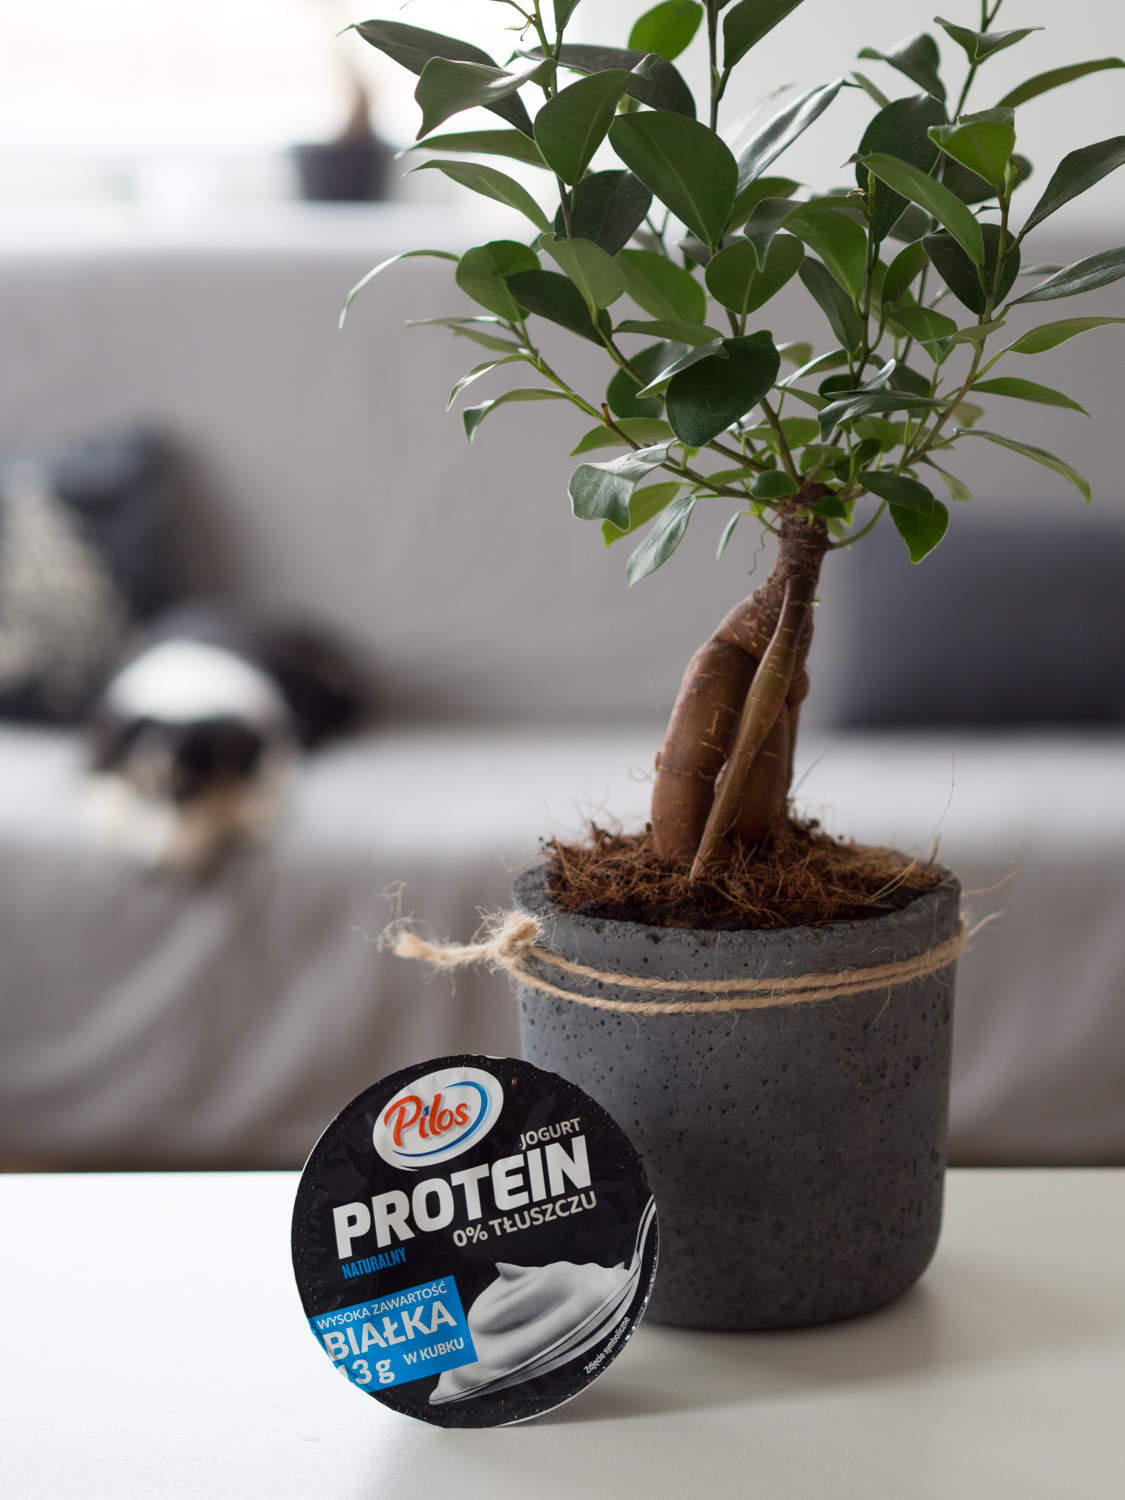 Zakupy Dietetyka: jogurt Protein naturalny (Pilos)